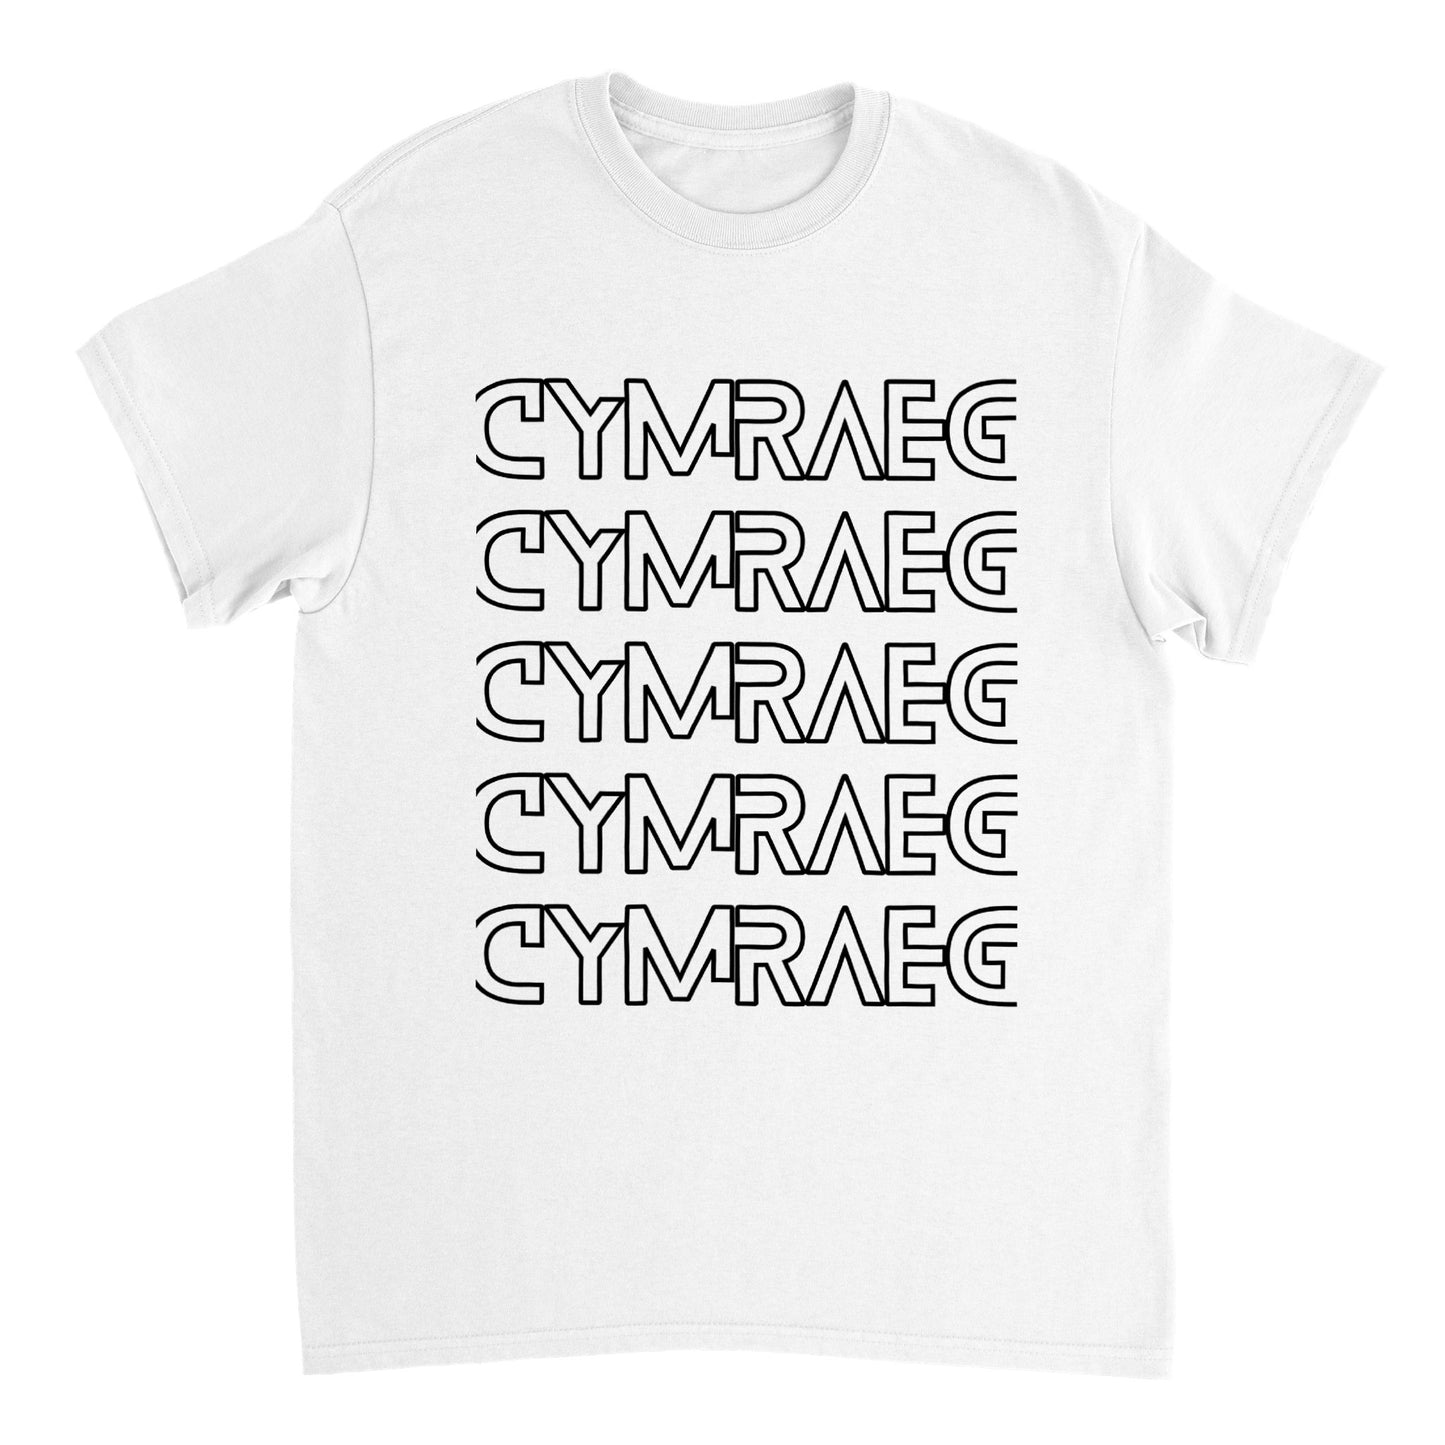 Cymraeg - Heavyweight Unisex Crewneck T-shirt